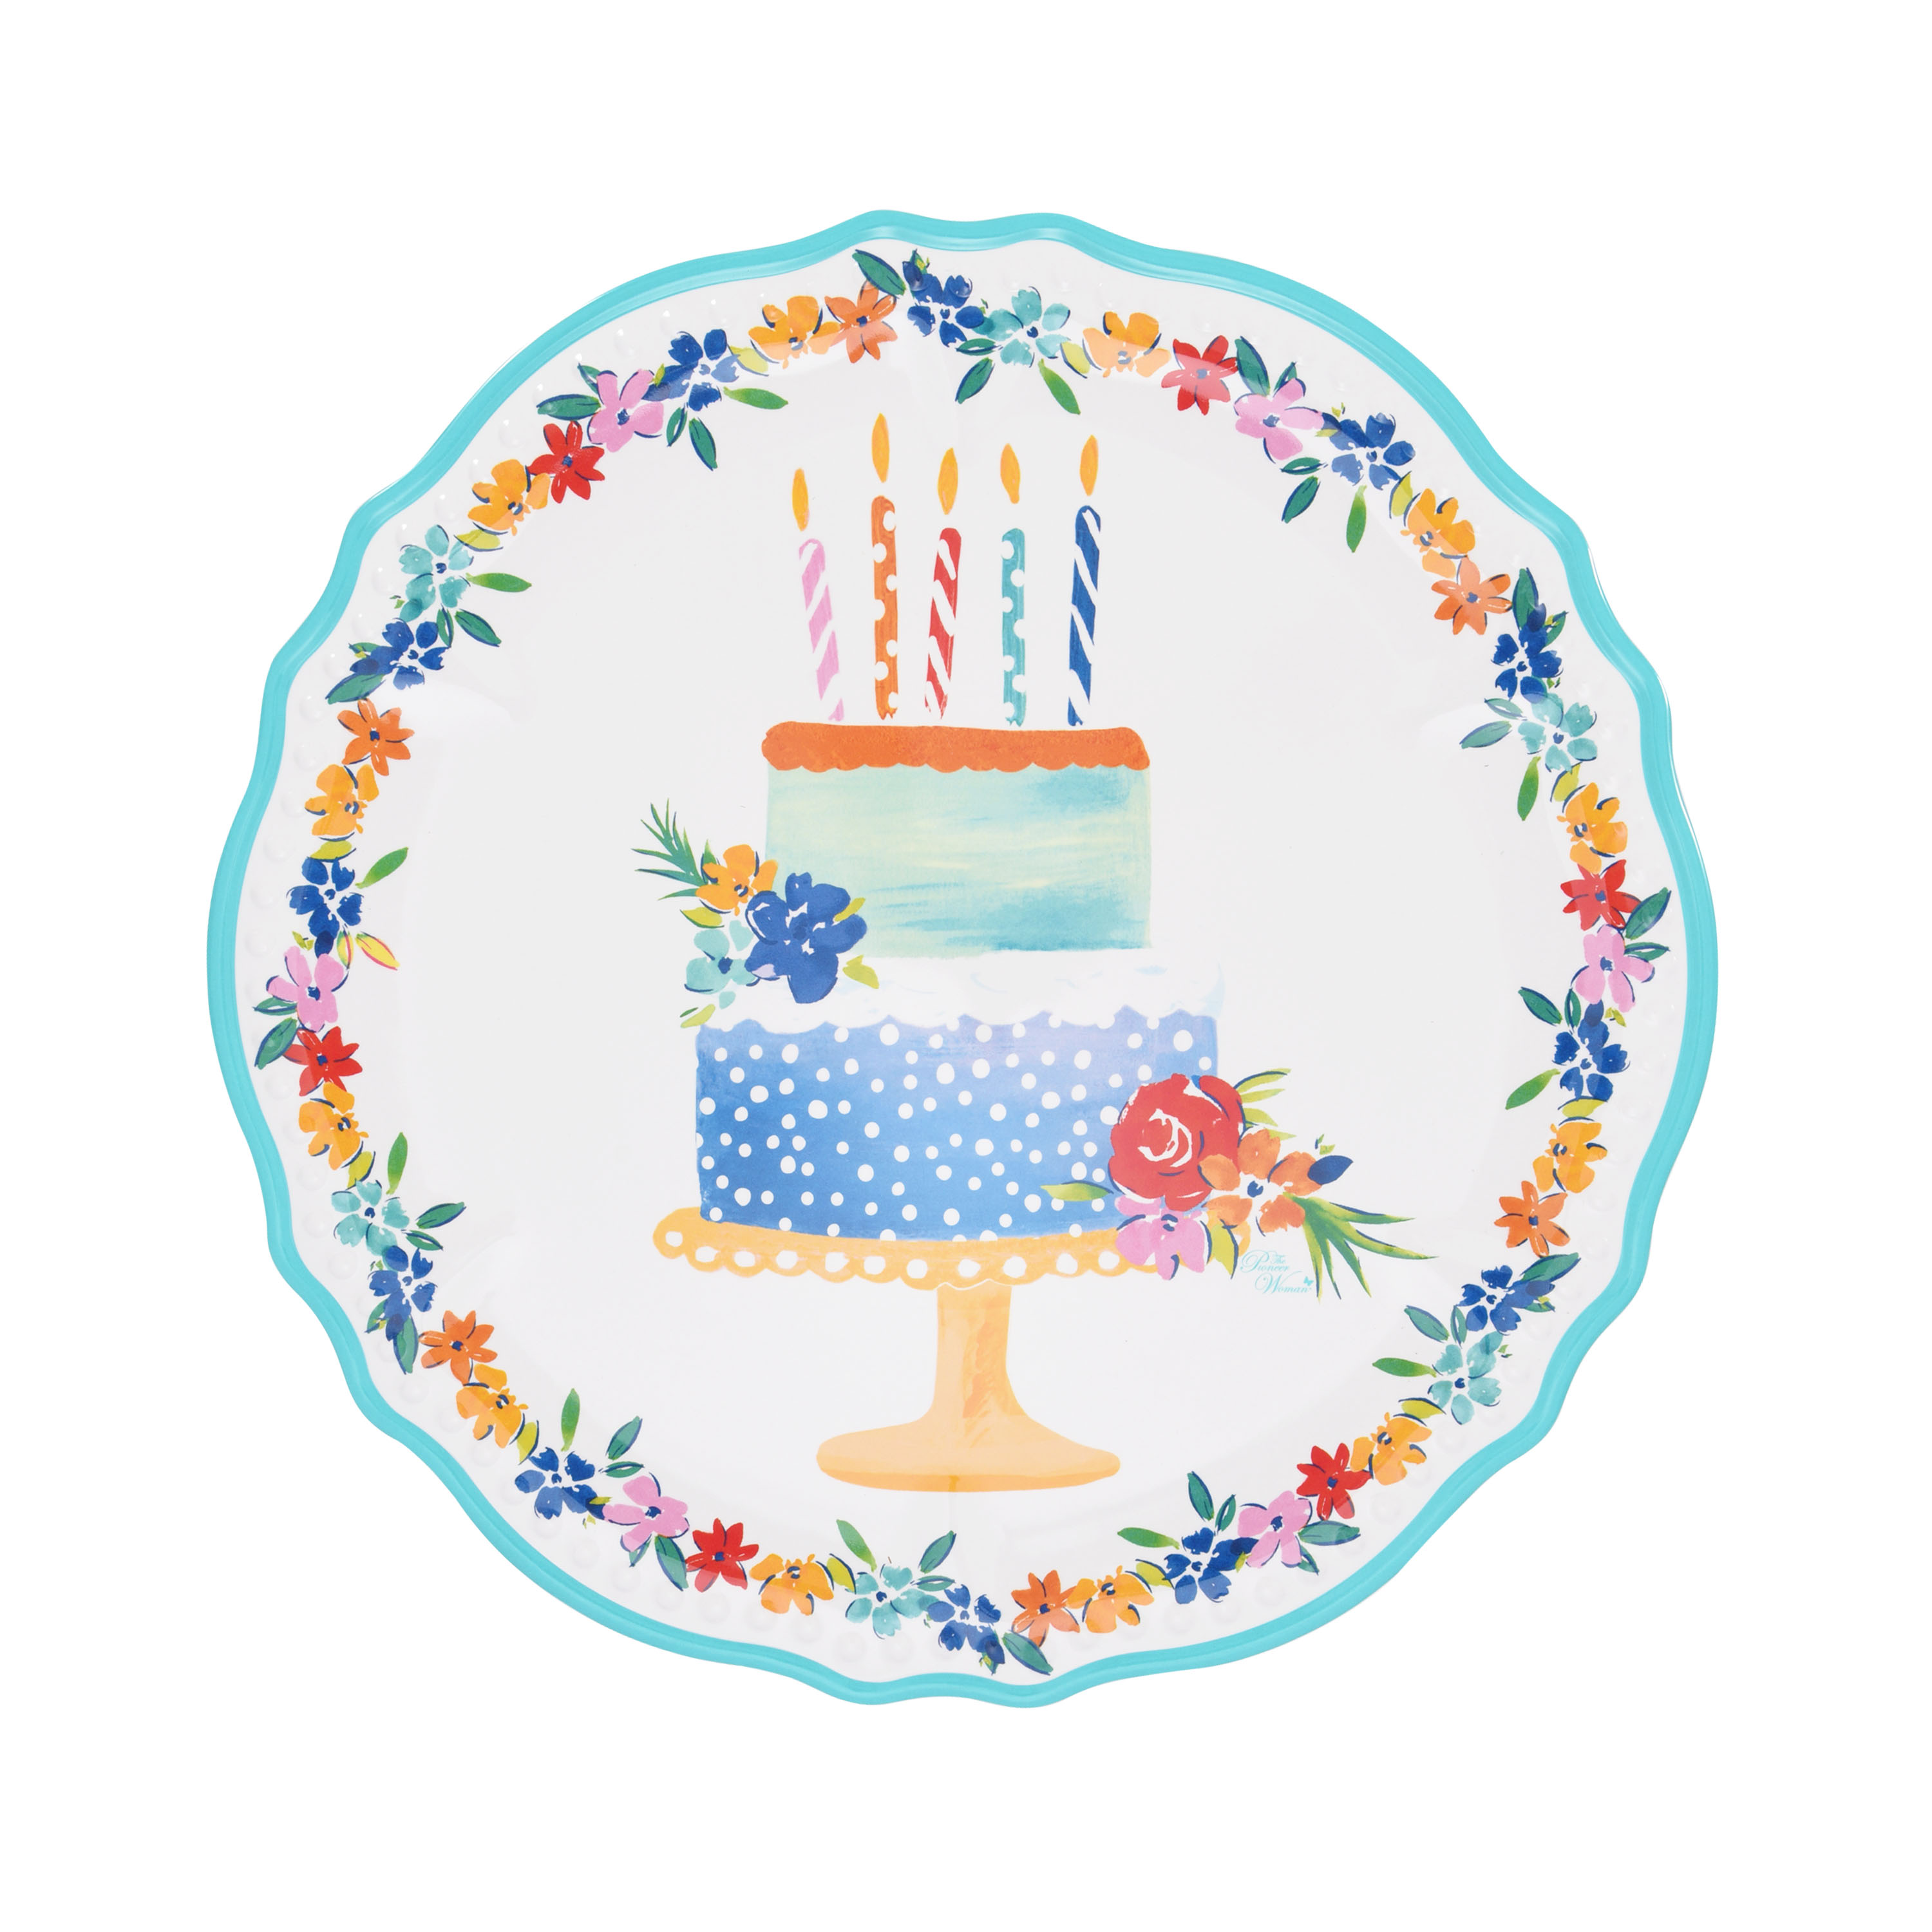 Pioneer Woman 14-inch Birthday Platter Assortment - image 2 of 8